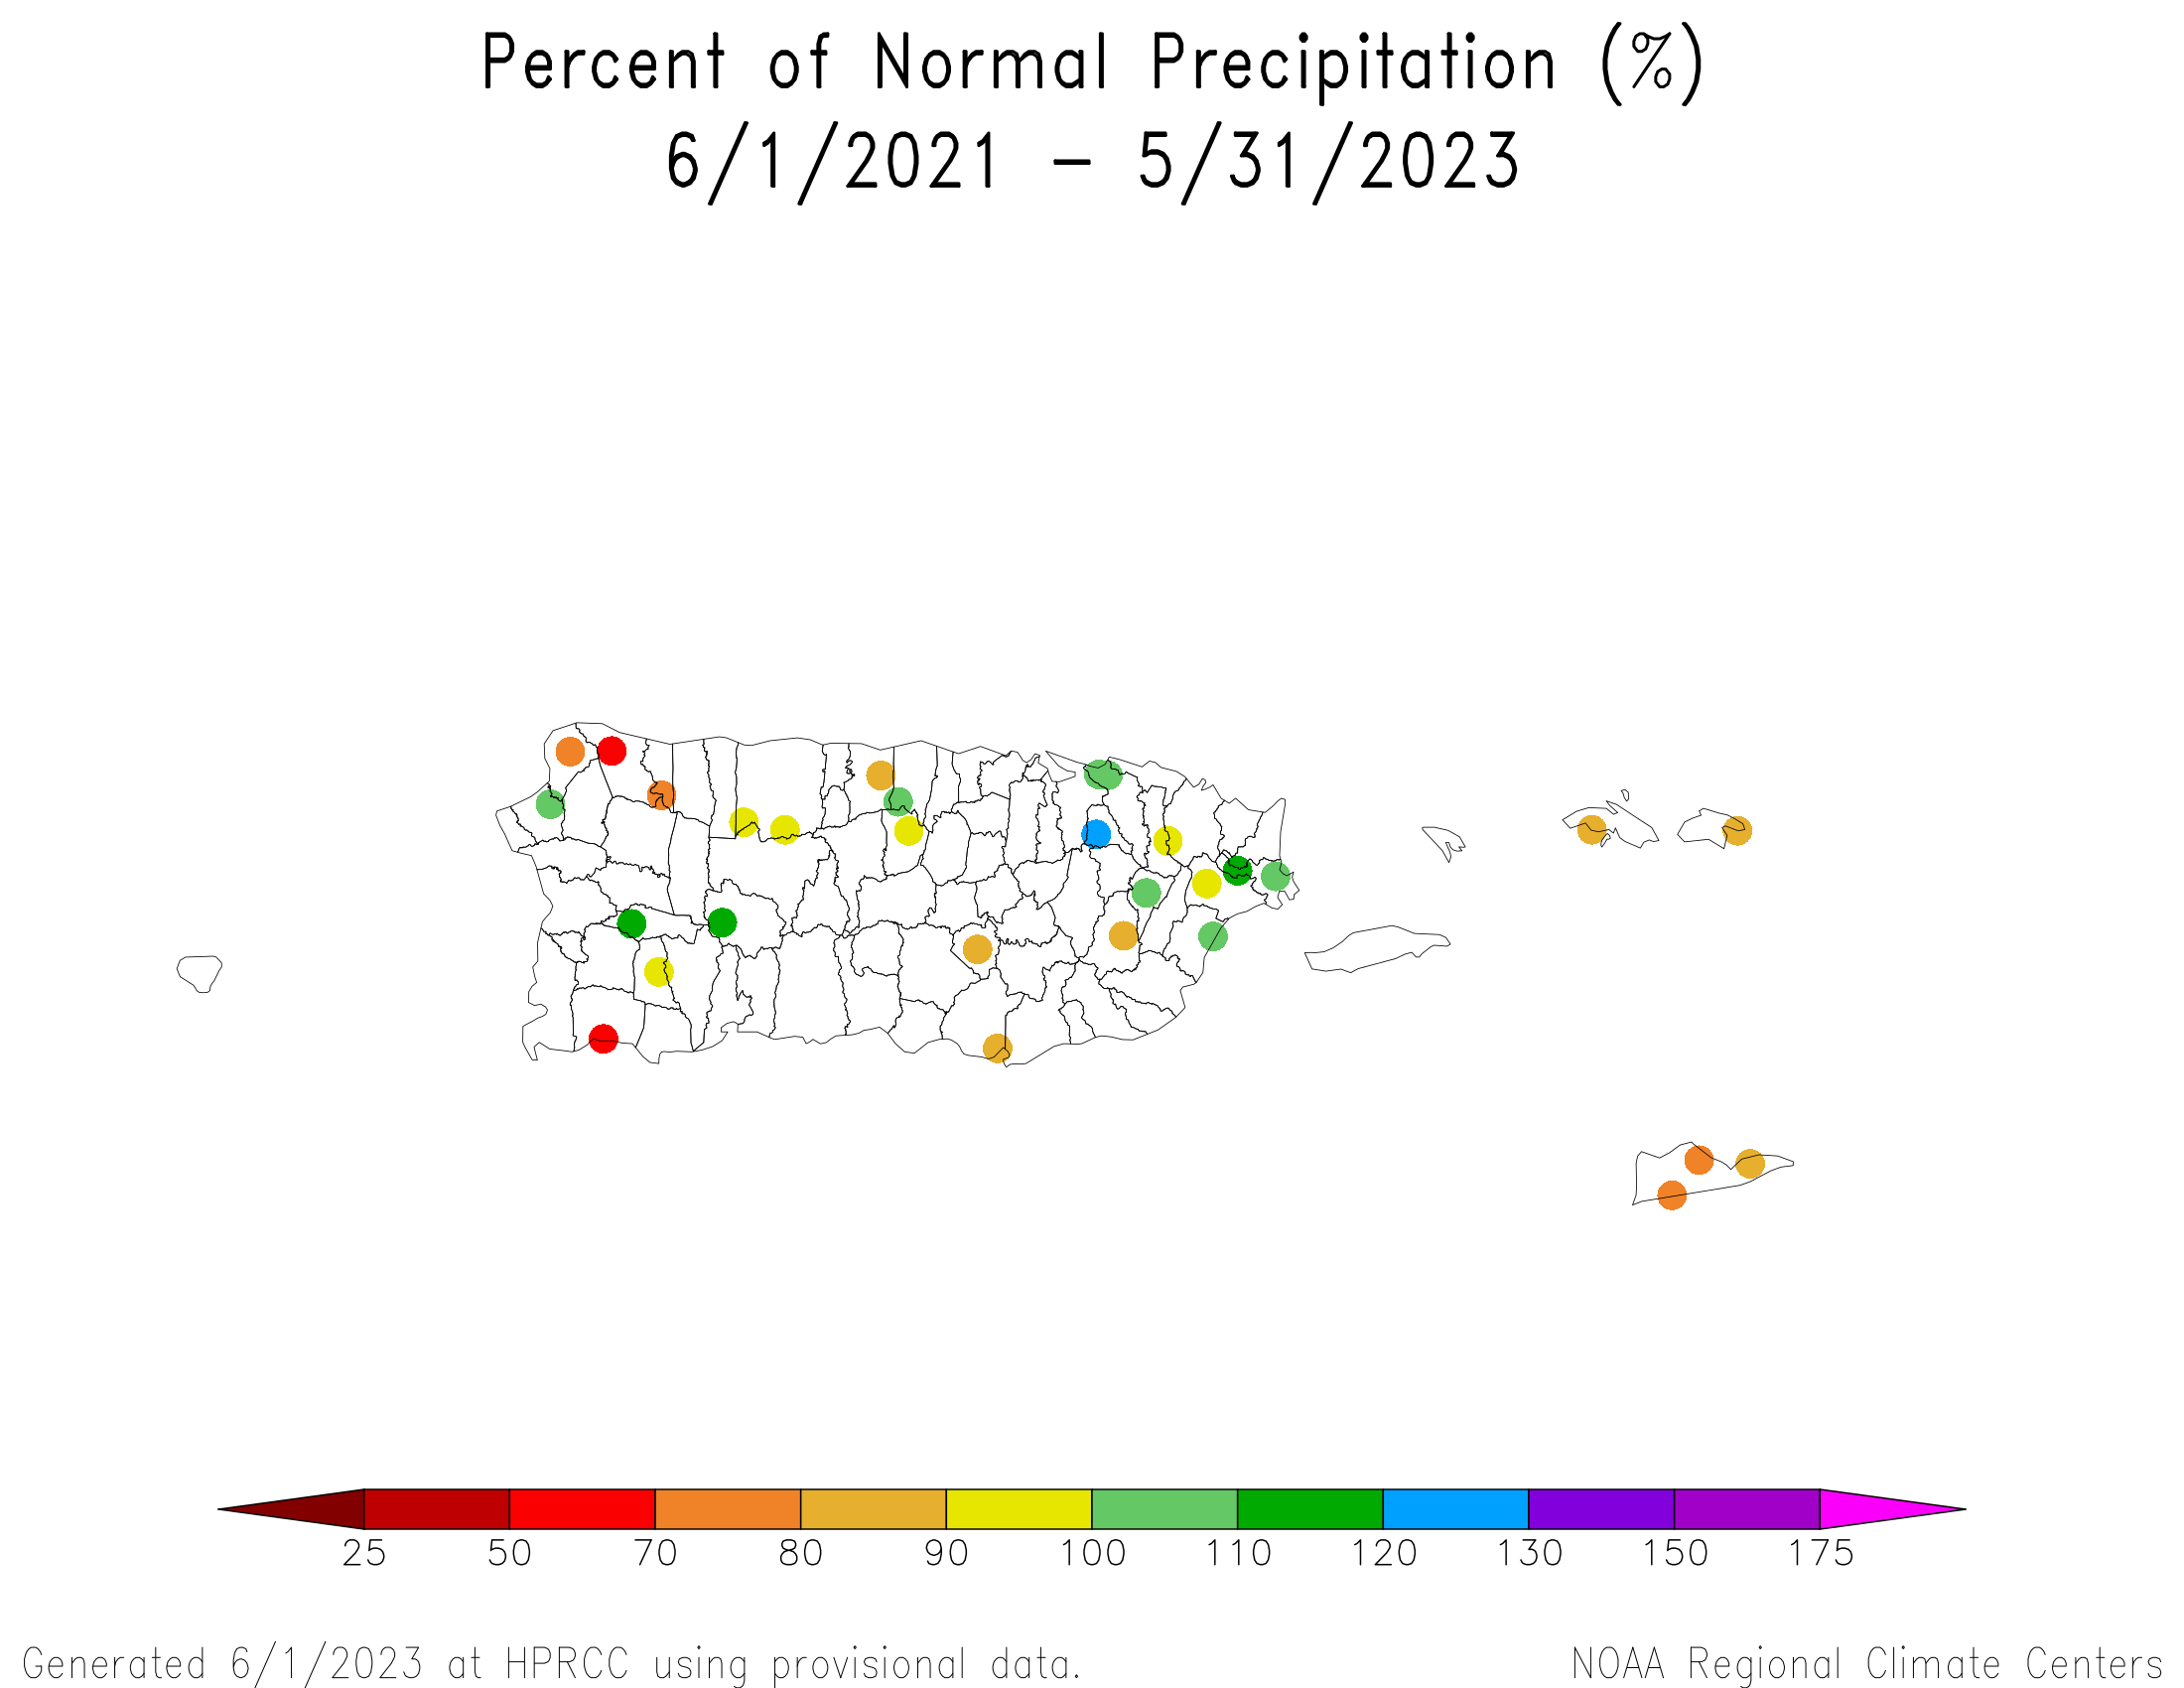 Puerto Rico and US Virgin Islands Percent of Normal Precipitation, June 2021-May 2023